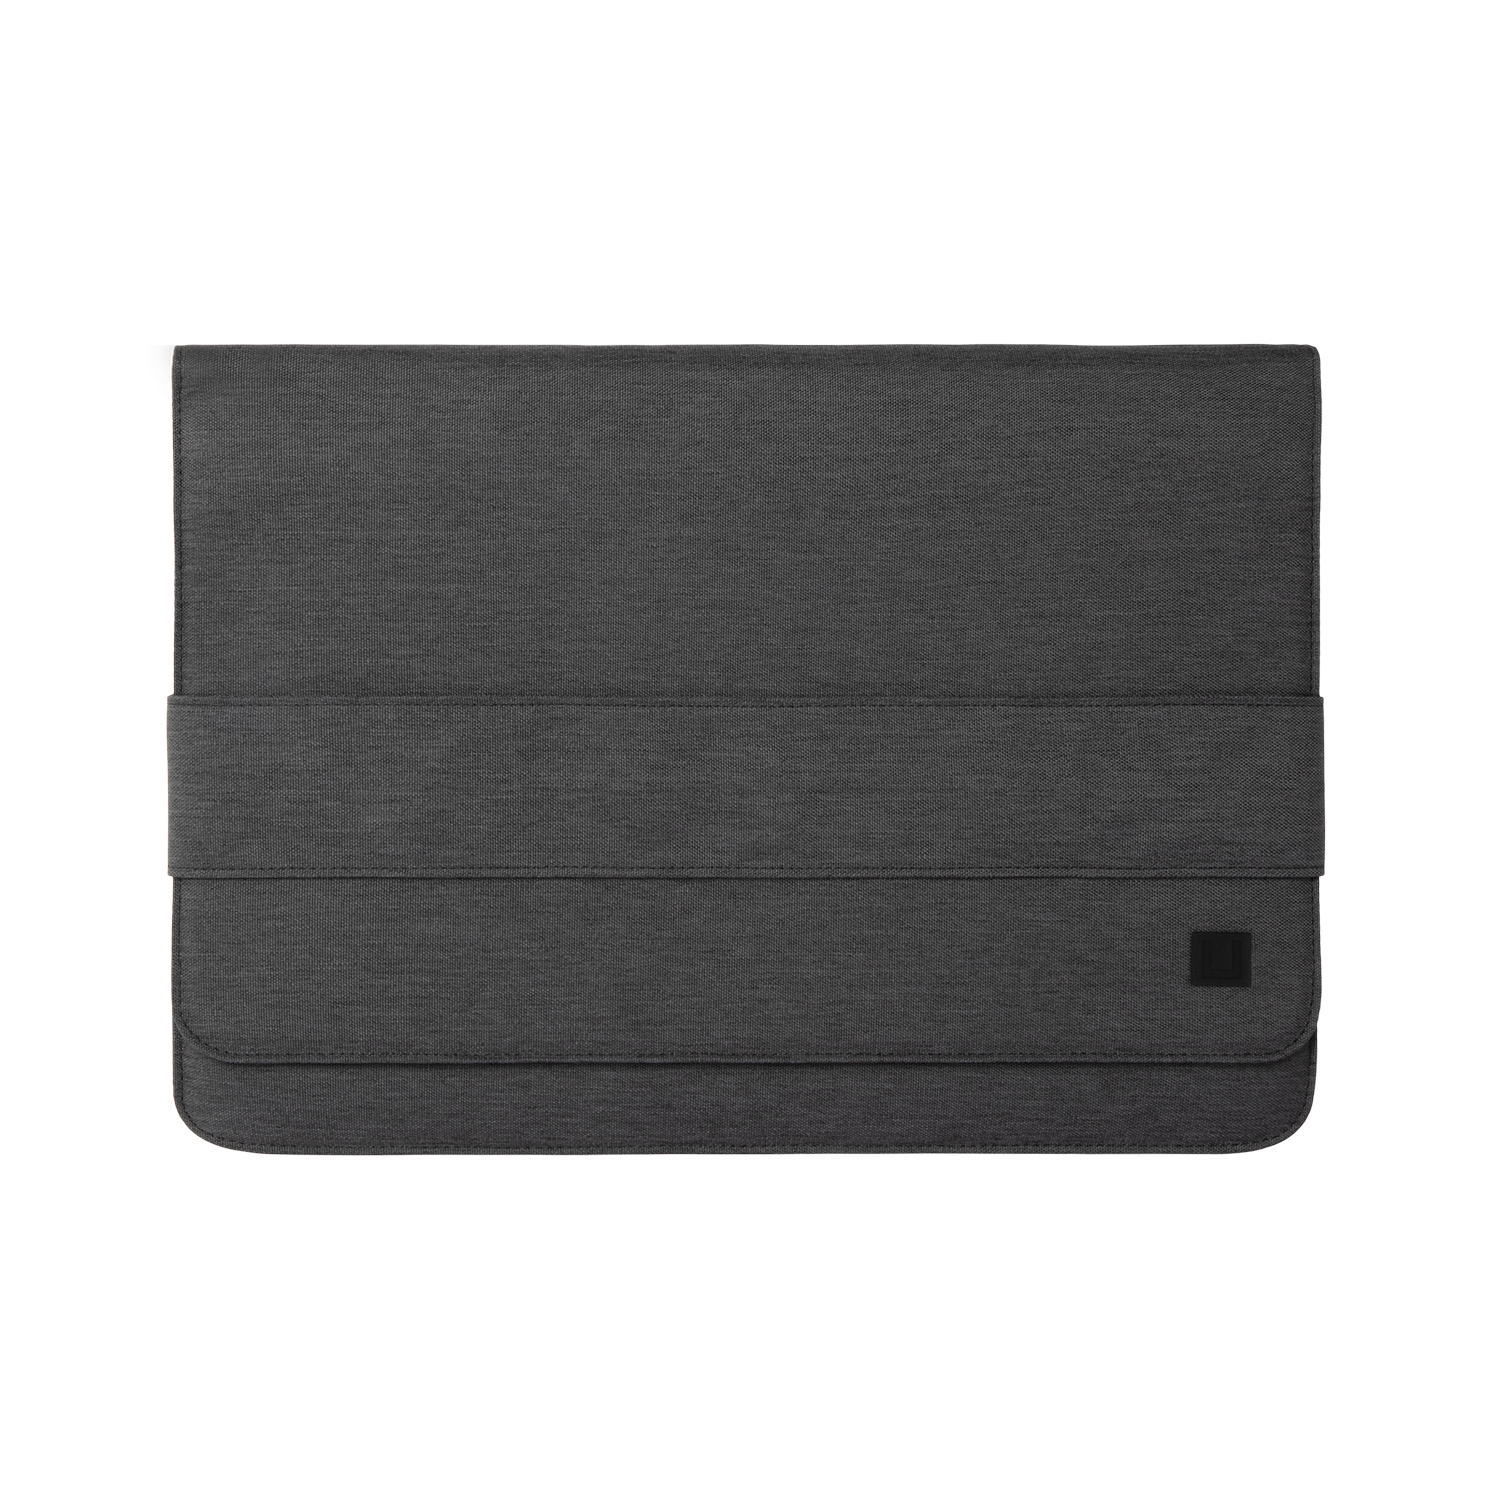 Knorrig Besmettelijk versnelling U] by UAG Mouve 13" Sleeve Tablet Sleeve Carrying Case | Urban Armor Gear